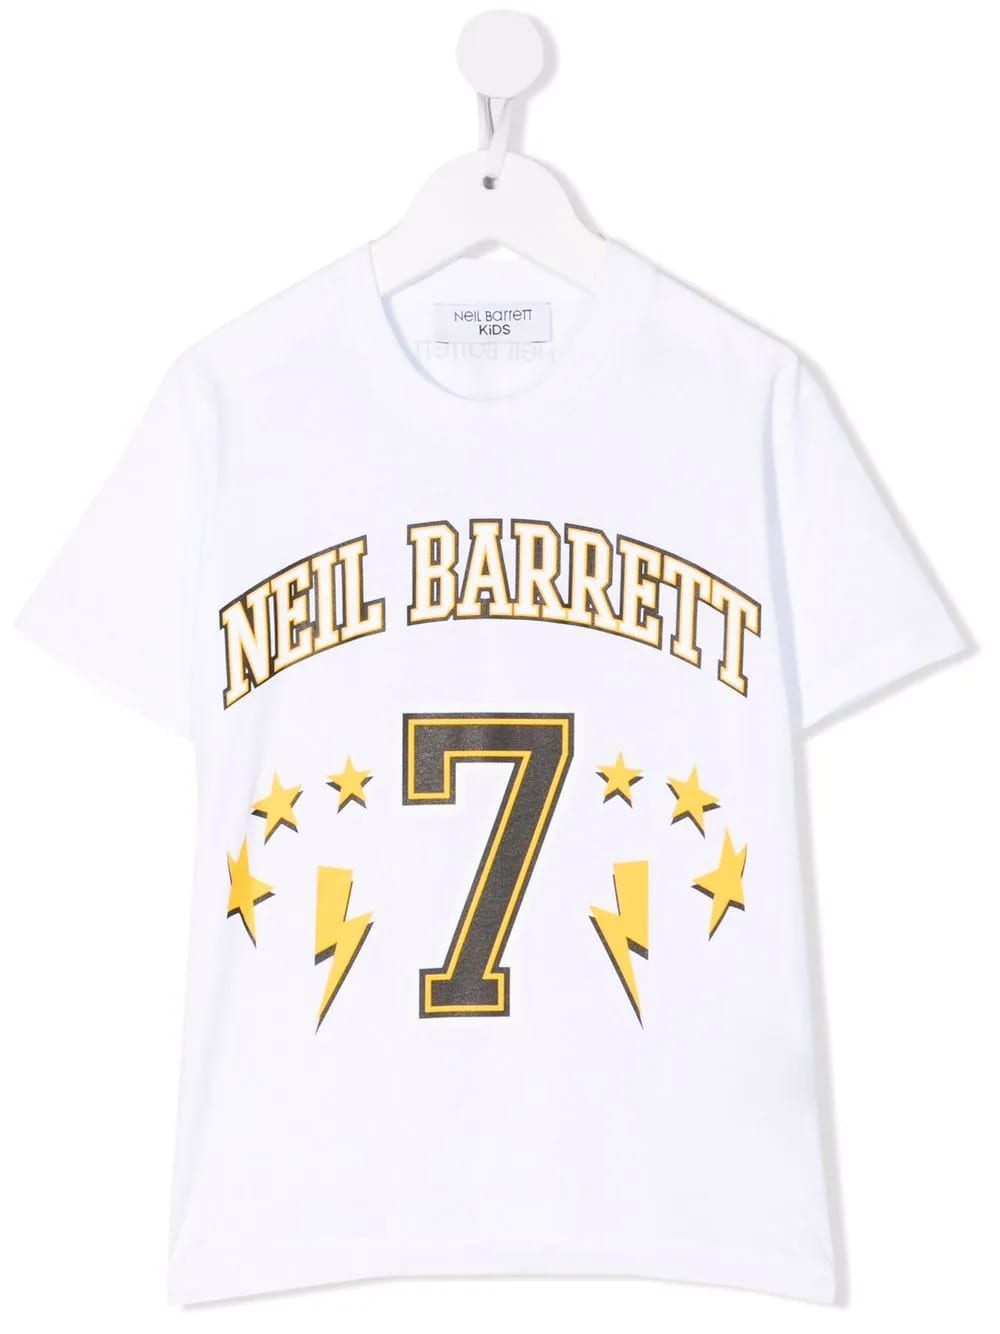 Neil Barrett Kids White T-shirt With Yellow And Black Print